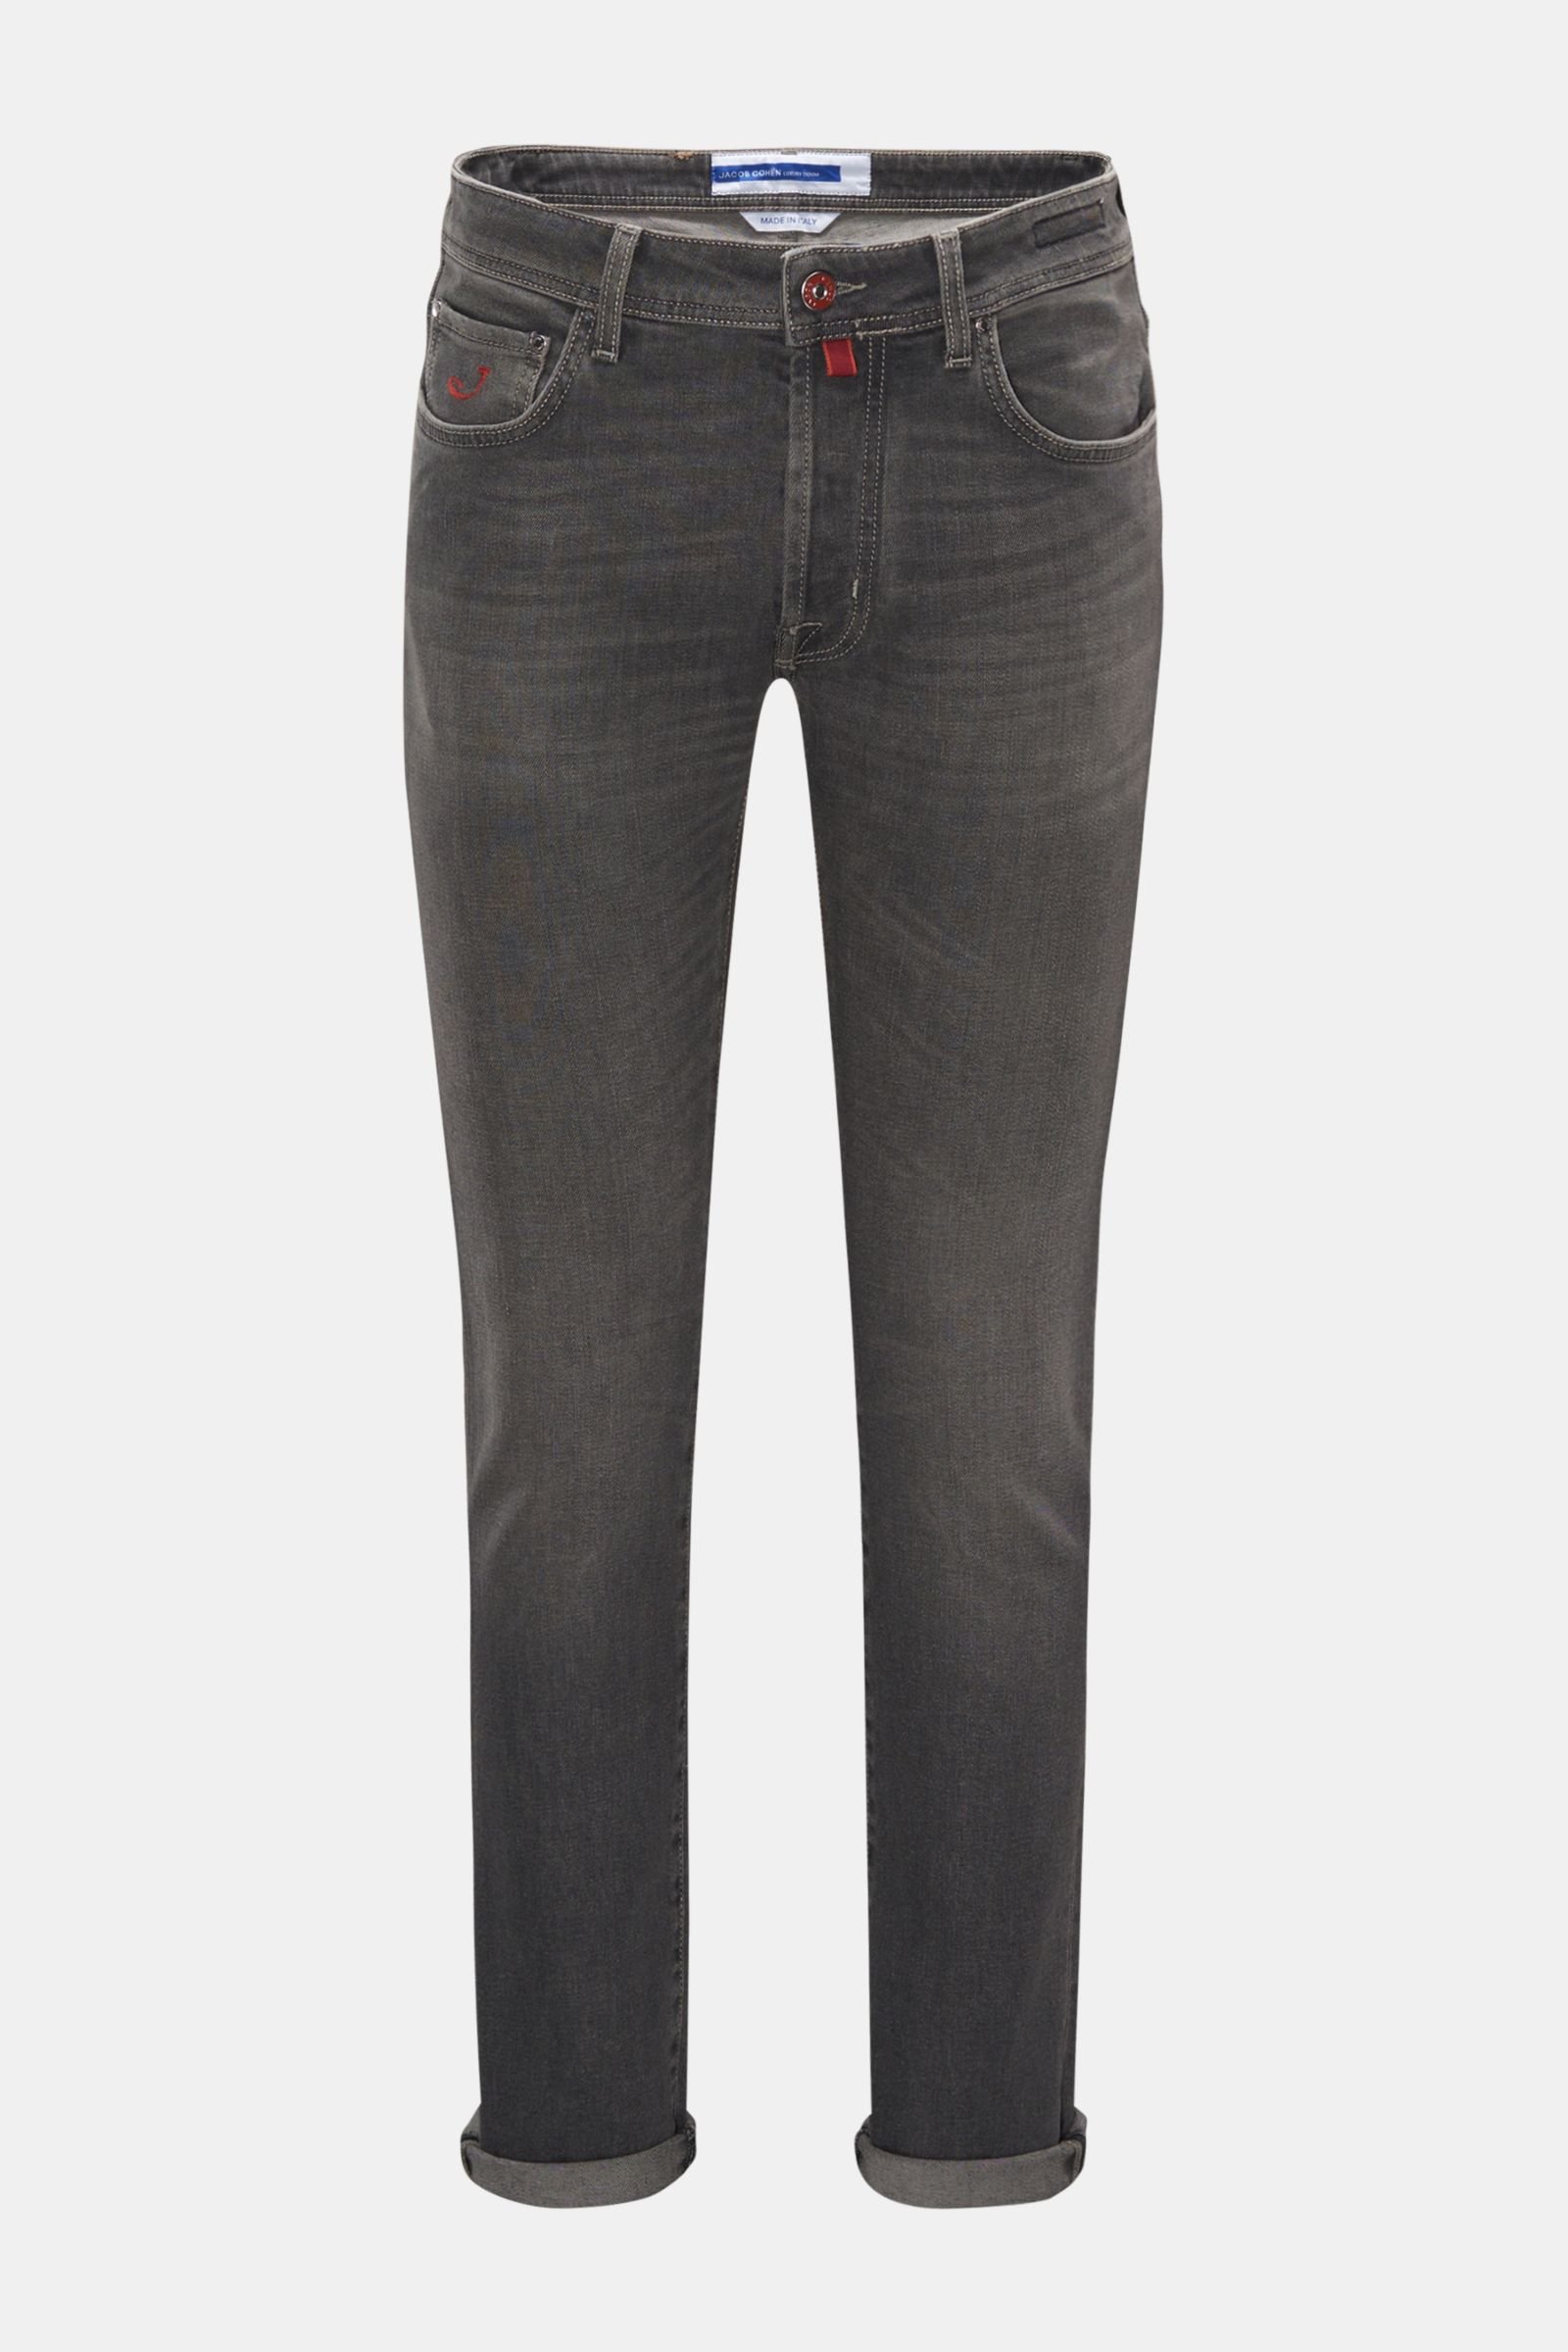 Jeans 'Bard' grey (formerly J688)